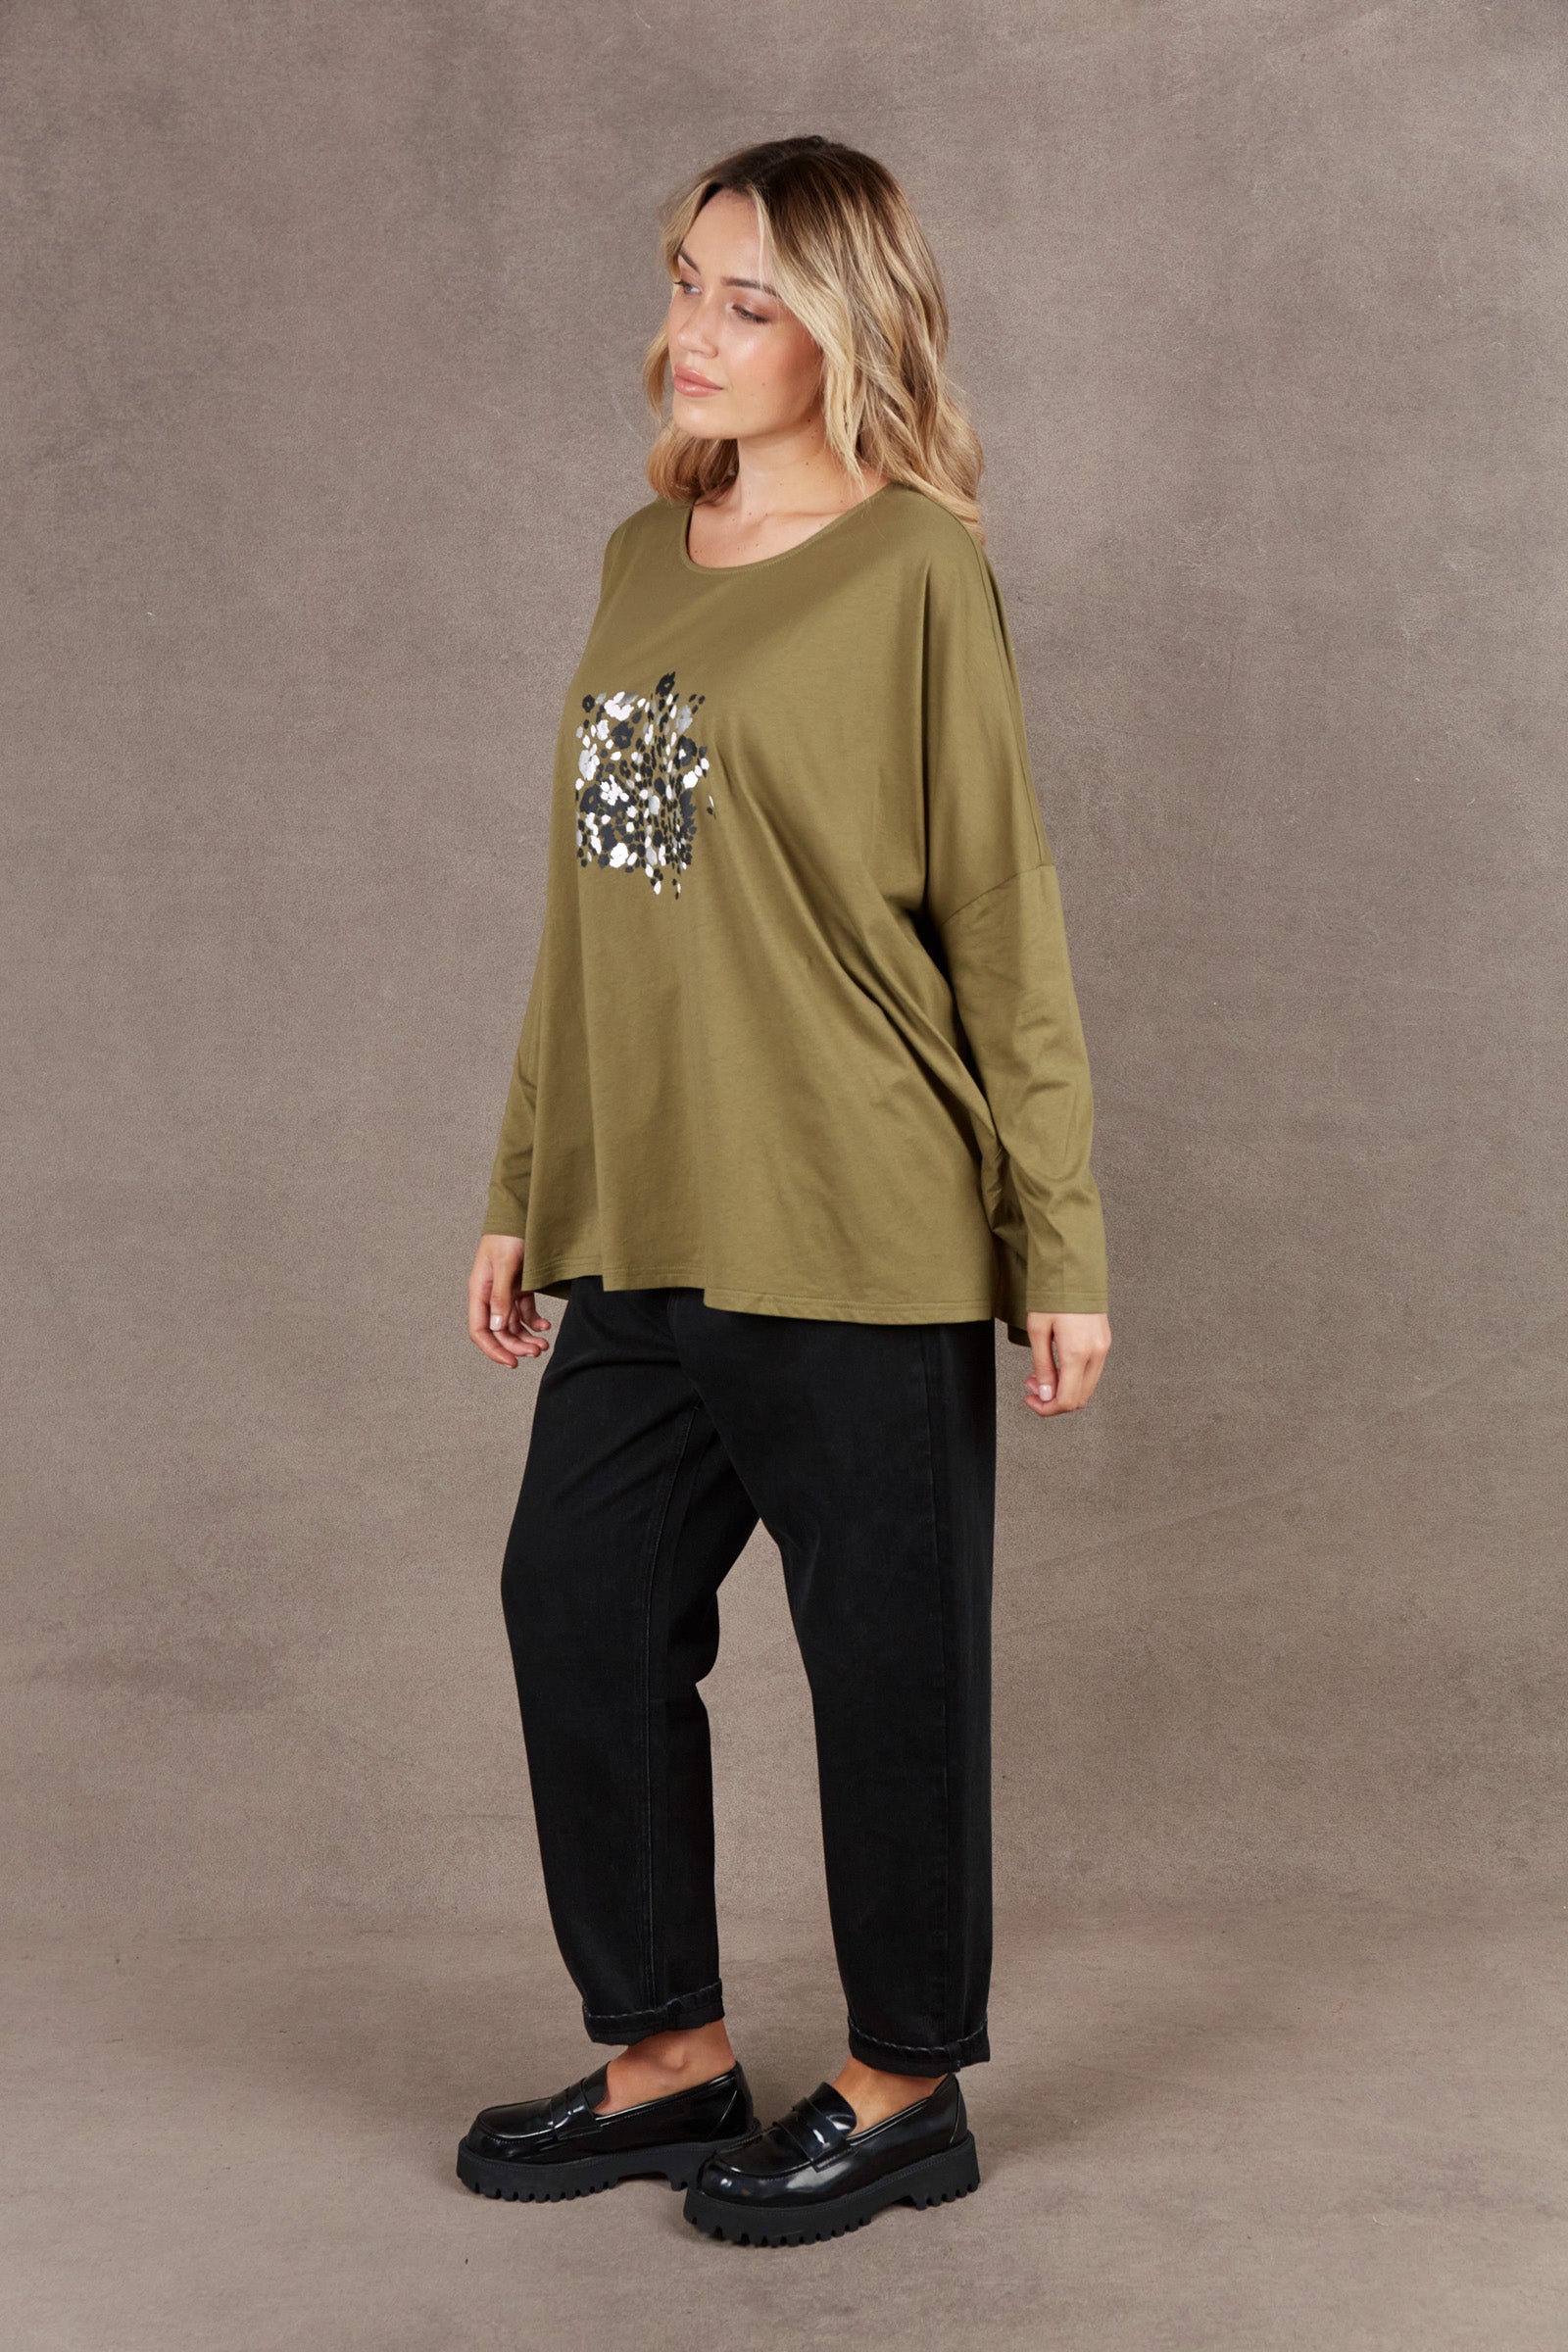 Pilbara Tshirt - Thyme - eb&ive Clothing - Top L/S One Size